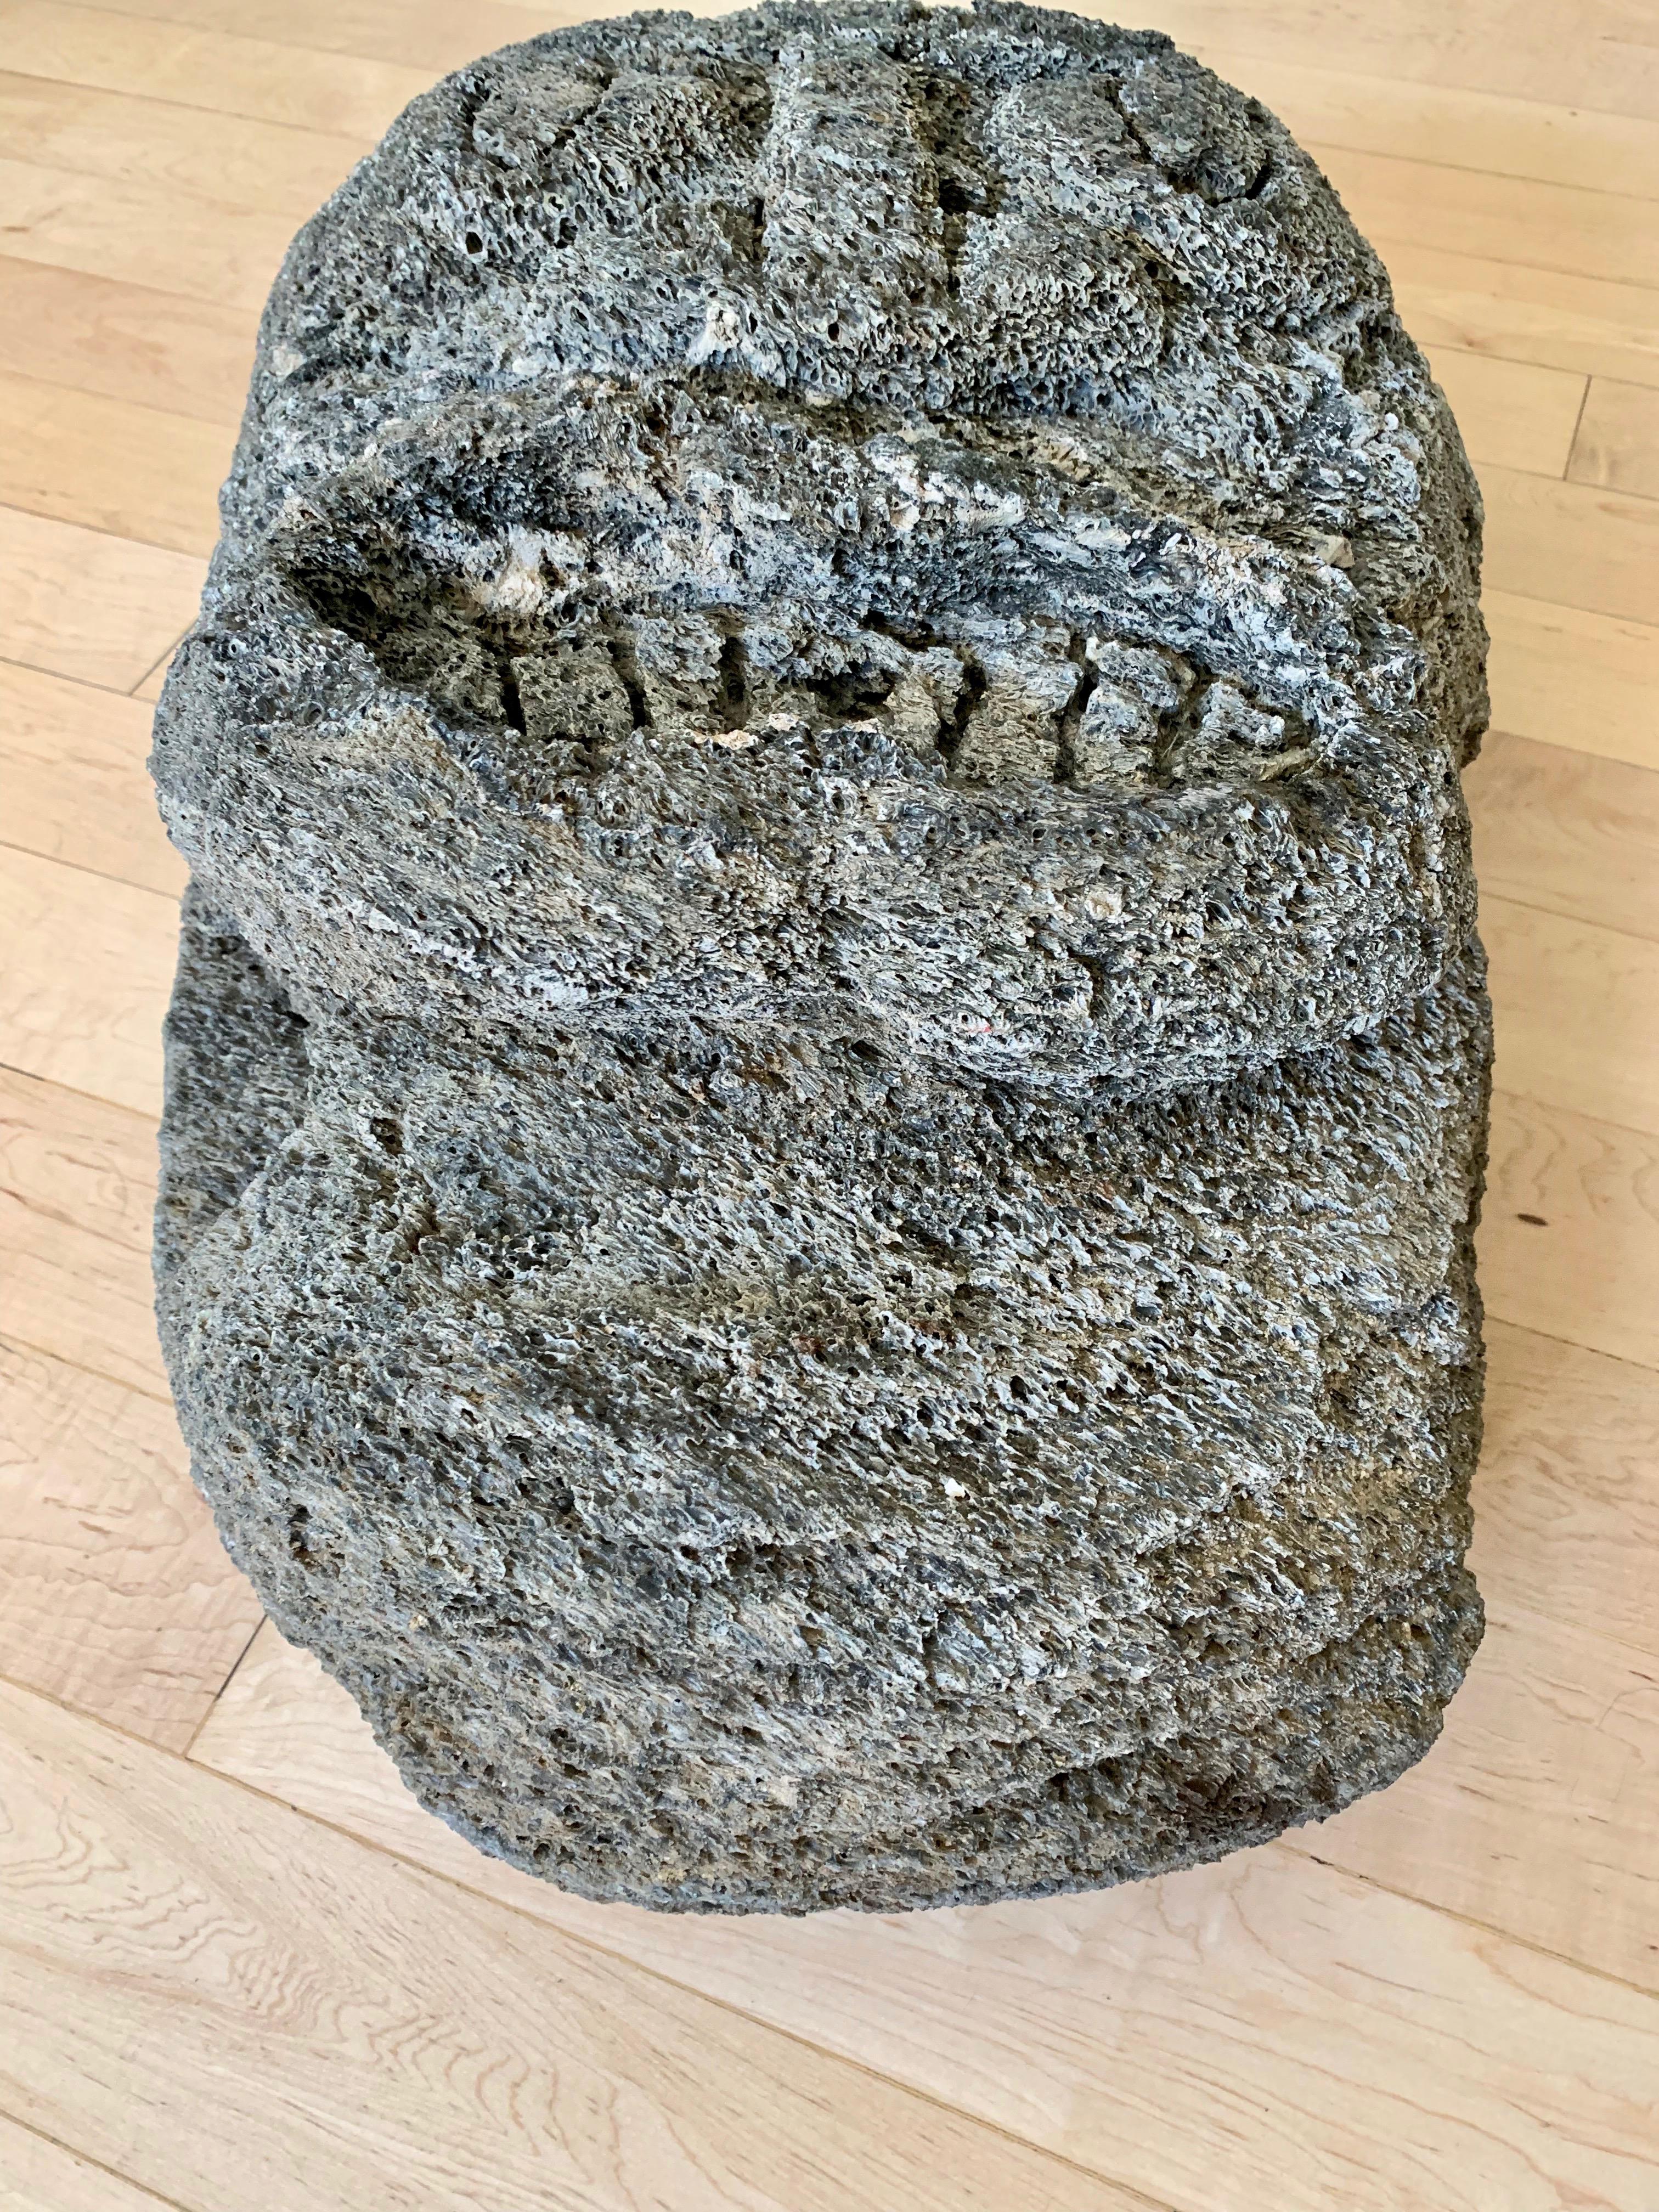 Hand-Carved Lava Rock Face Sculpture